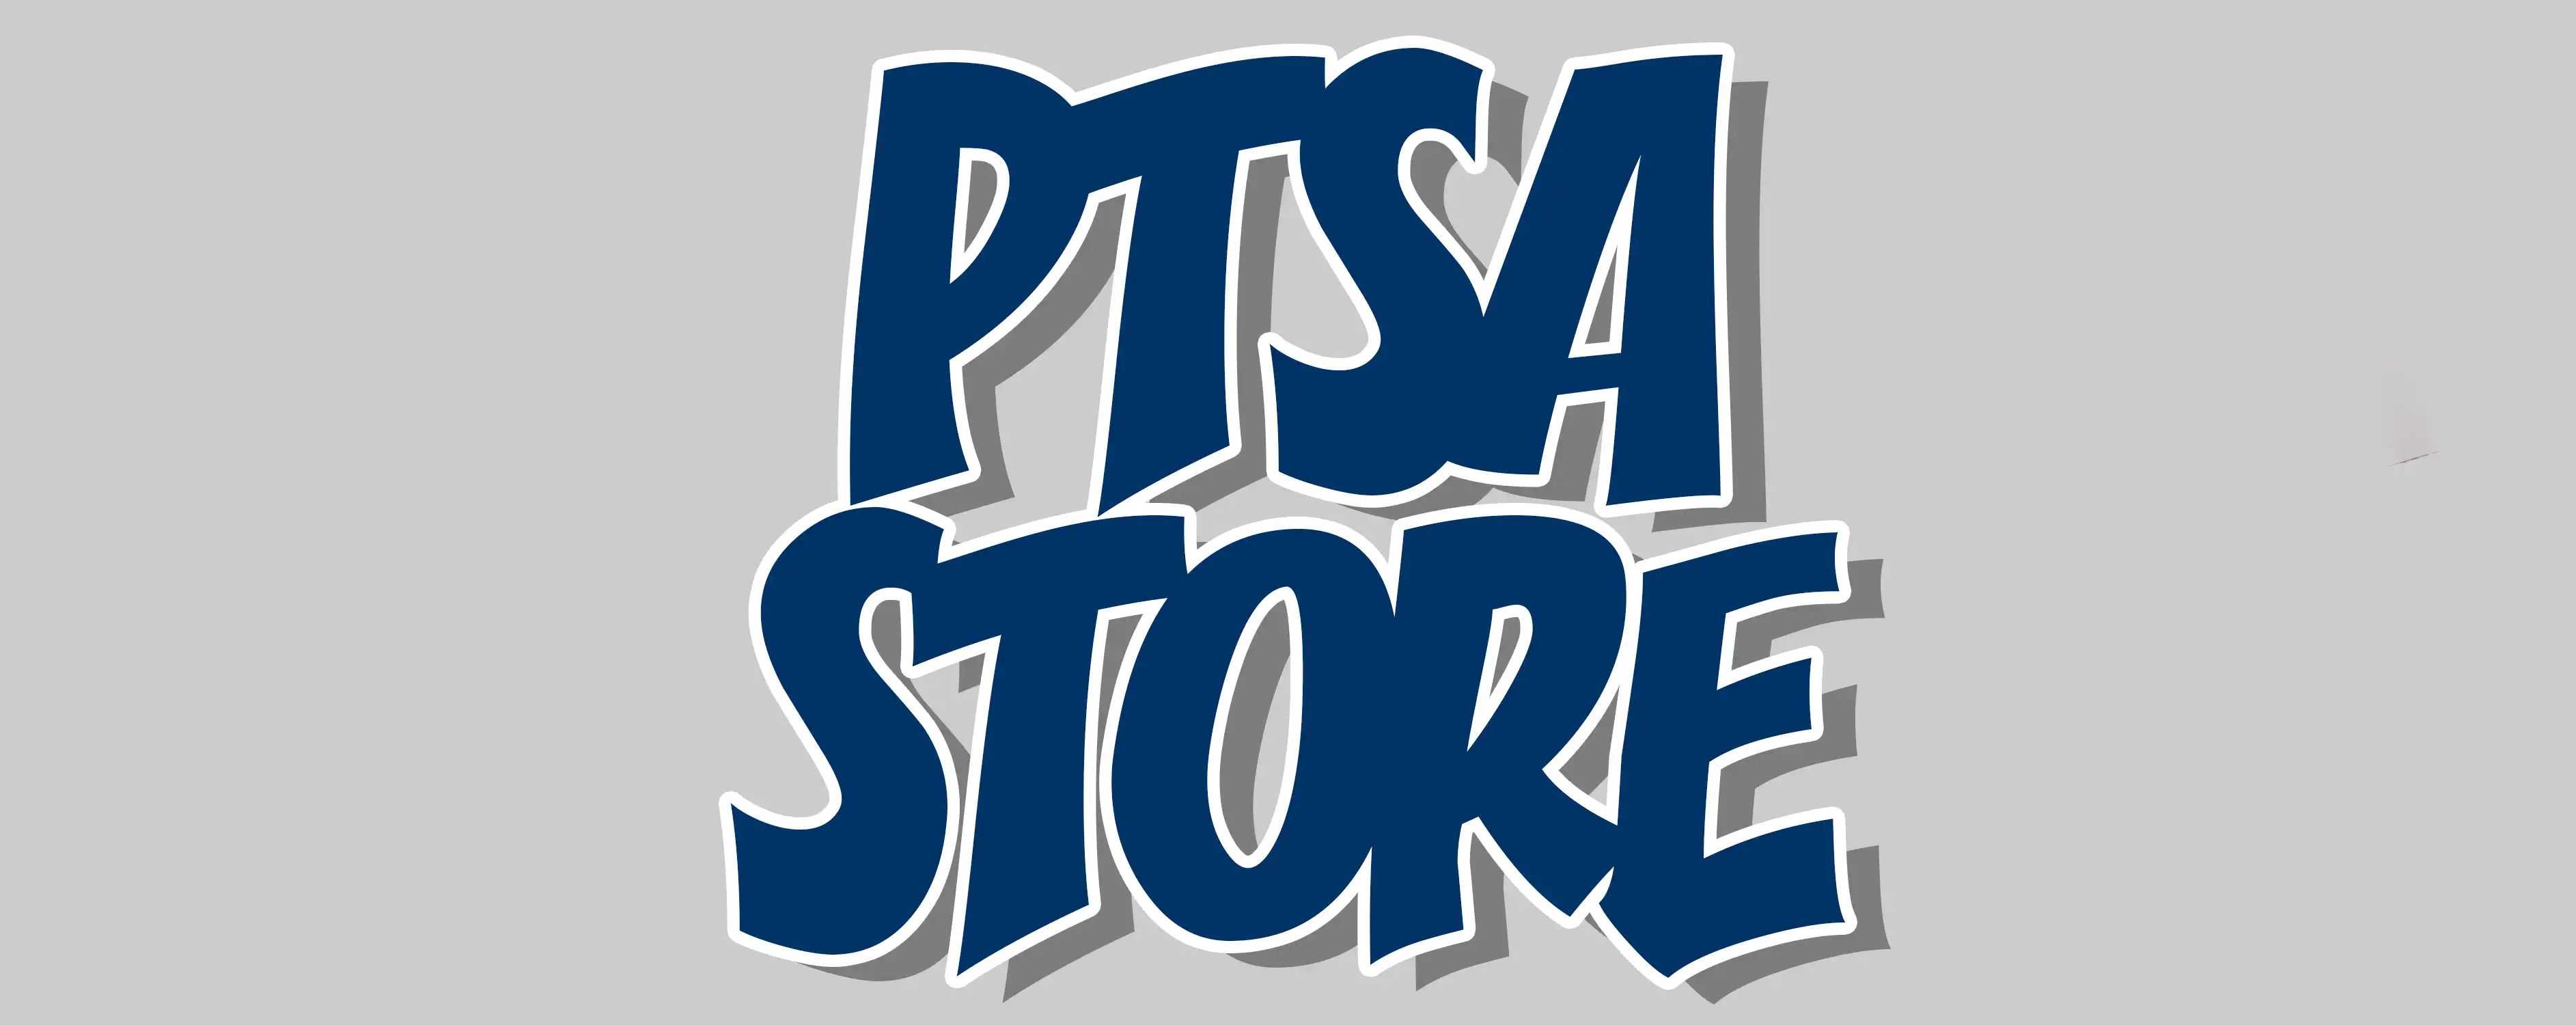 PTSA Store Banner